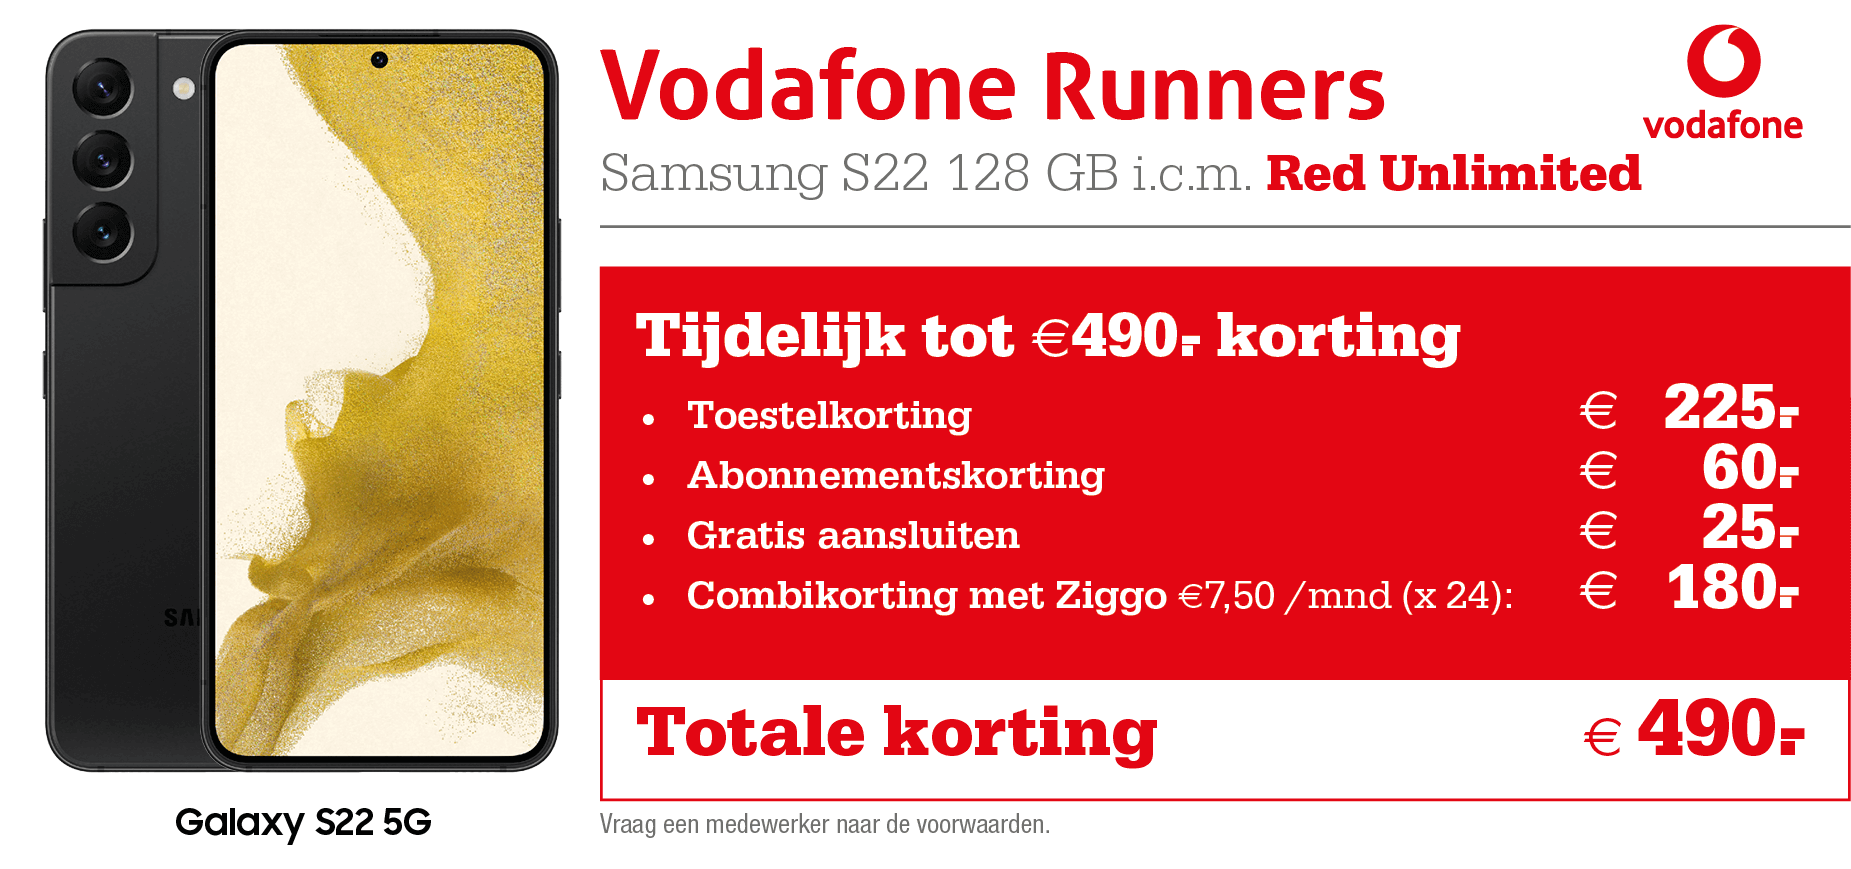 Samsung Galaxy S22 Vodaofne Runners